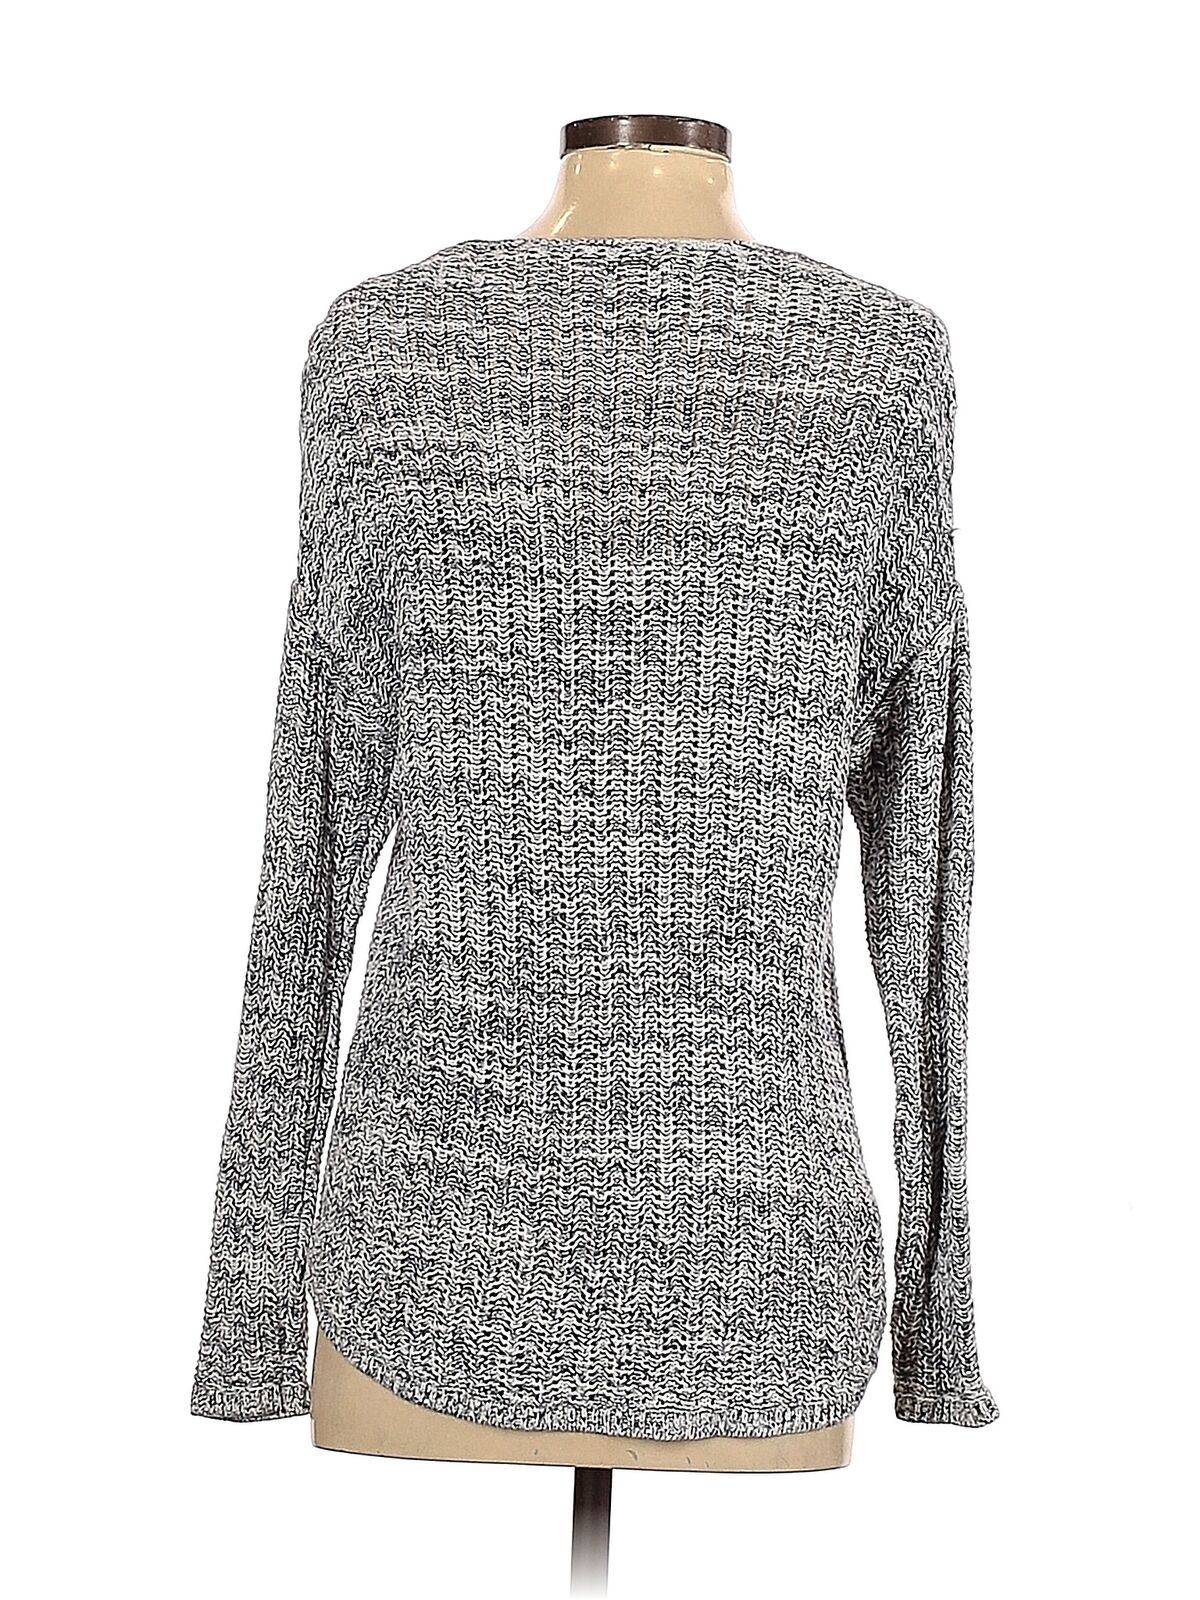 Old Navy Women Gray Pullover Sweater S | eBay